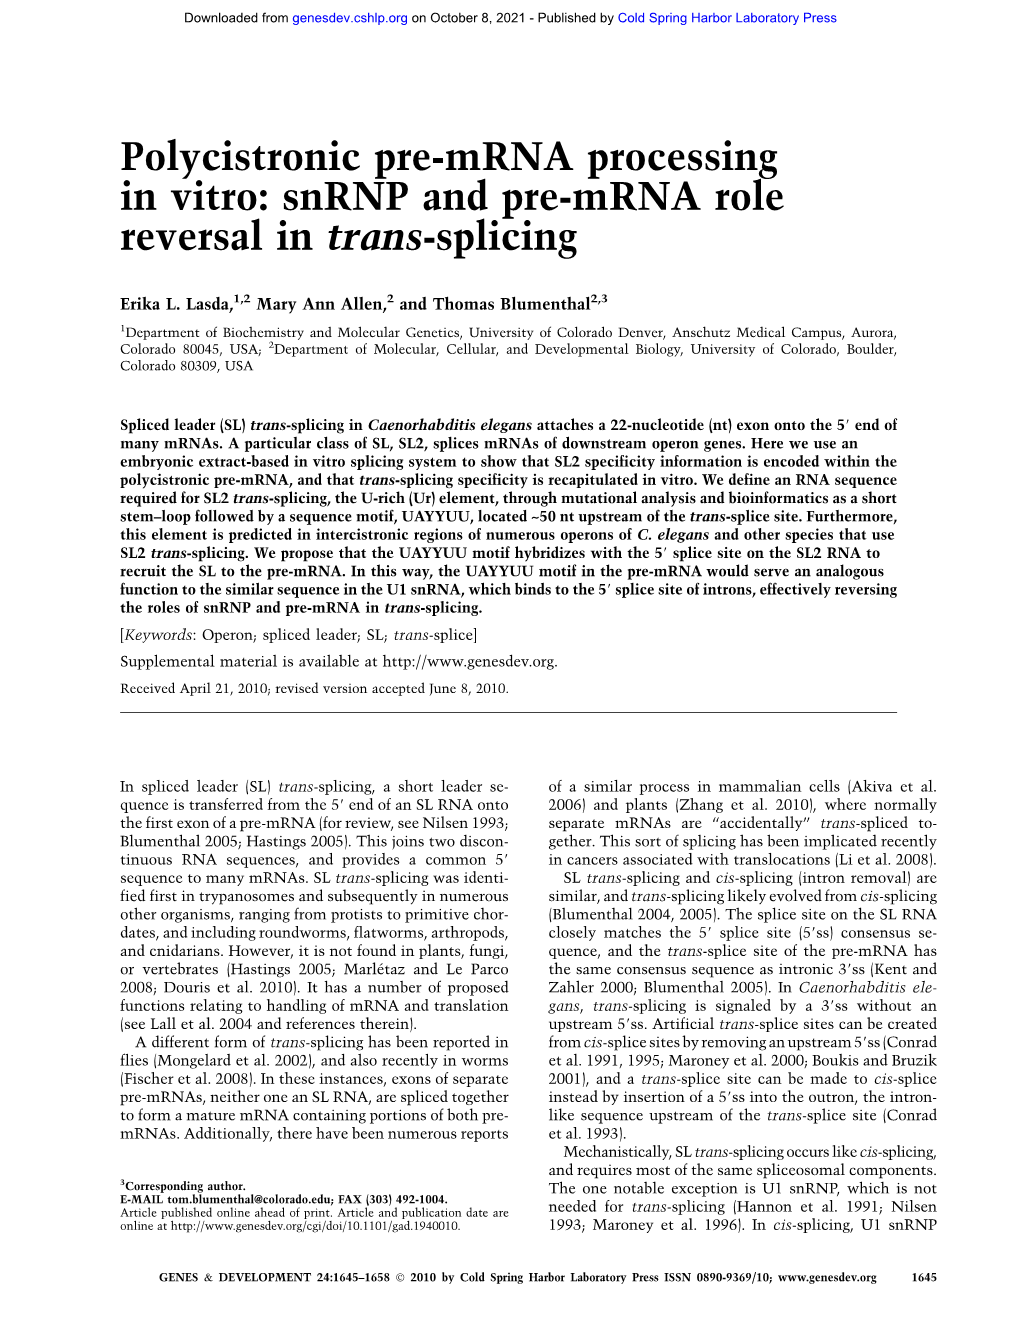 Polycistronic Pre-Mrna Processing in Vitro: Snrnp and Pre-Mrna Role Reversal in Trans-Splicing